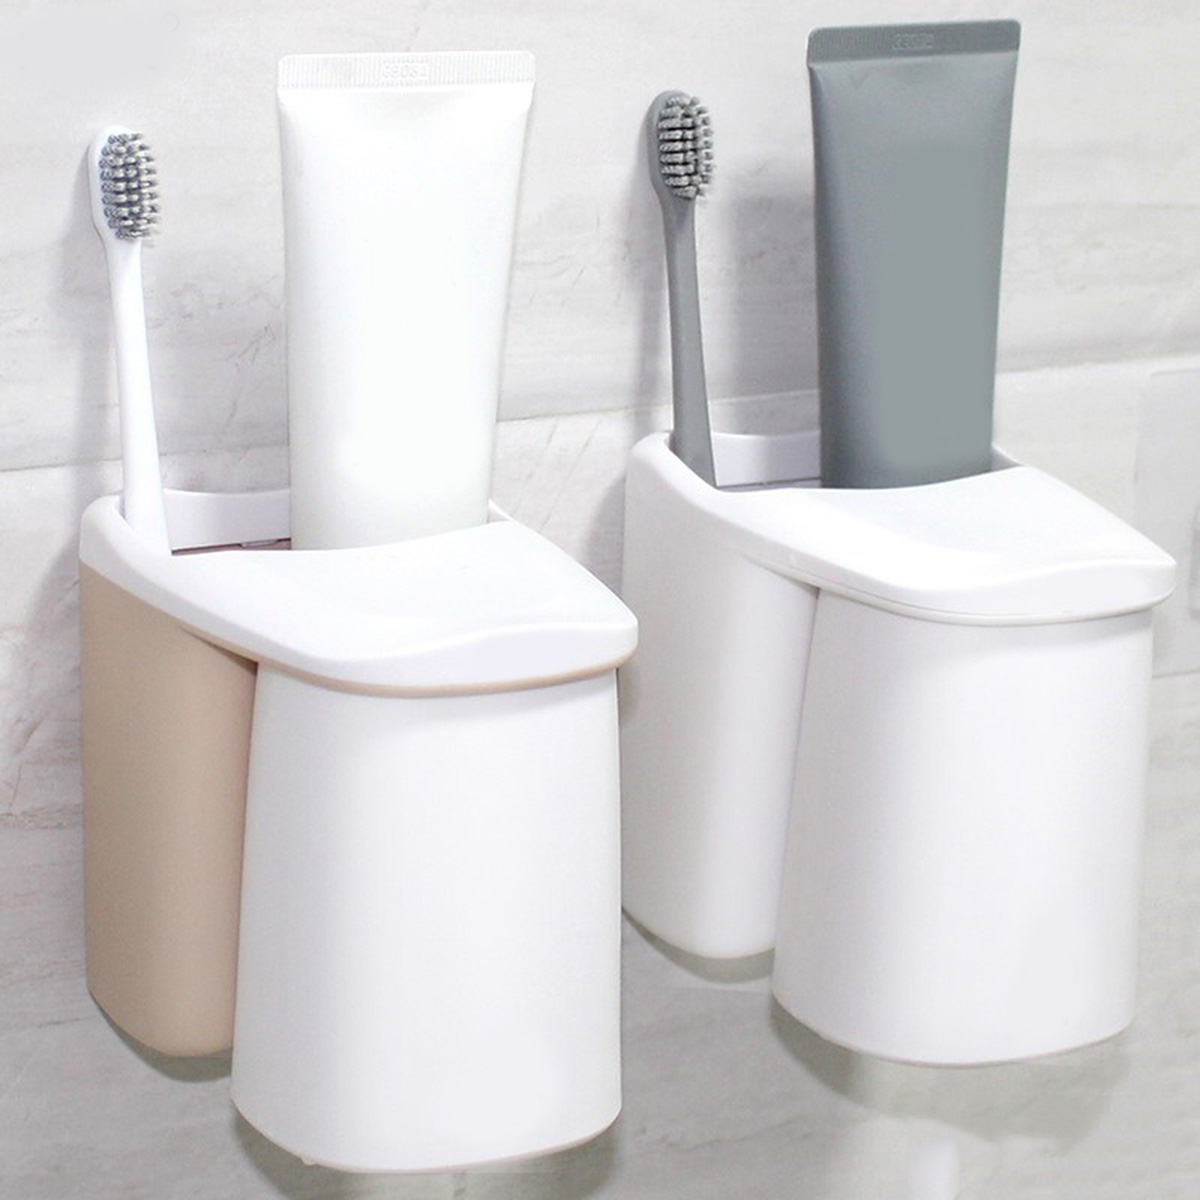 Bathroom-Toothpaste-Toothbrush-Holder-Storage-Shelf-Rack-Set-Magnetic-Cups-1587249-8